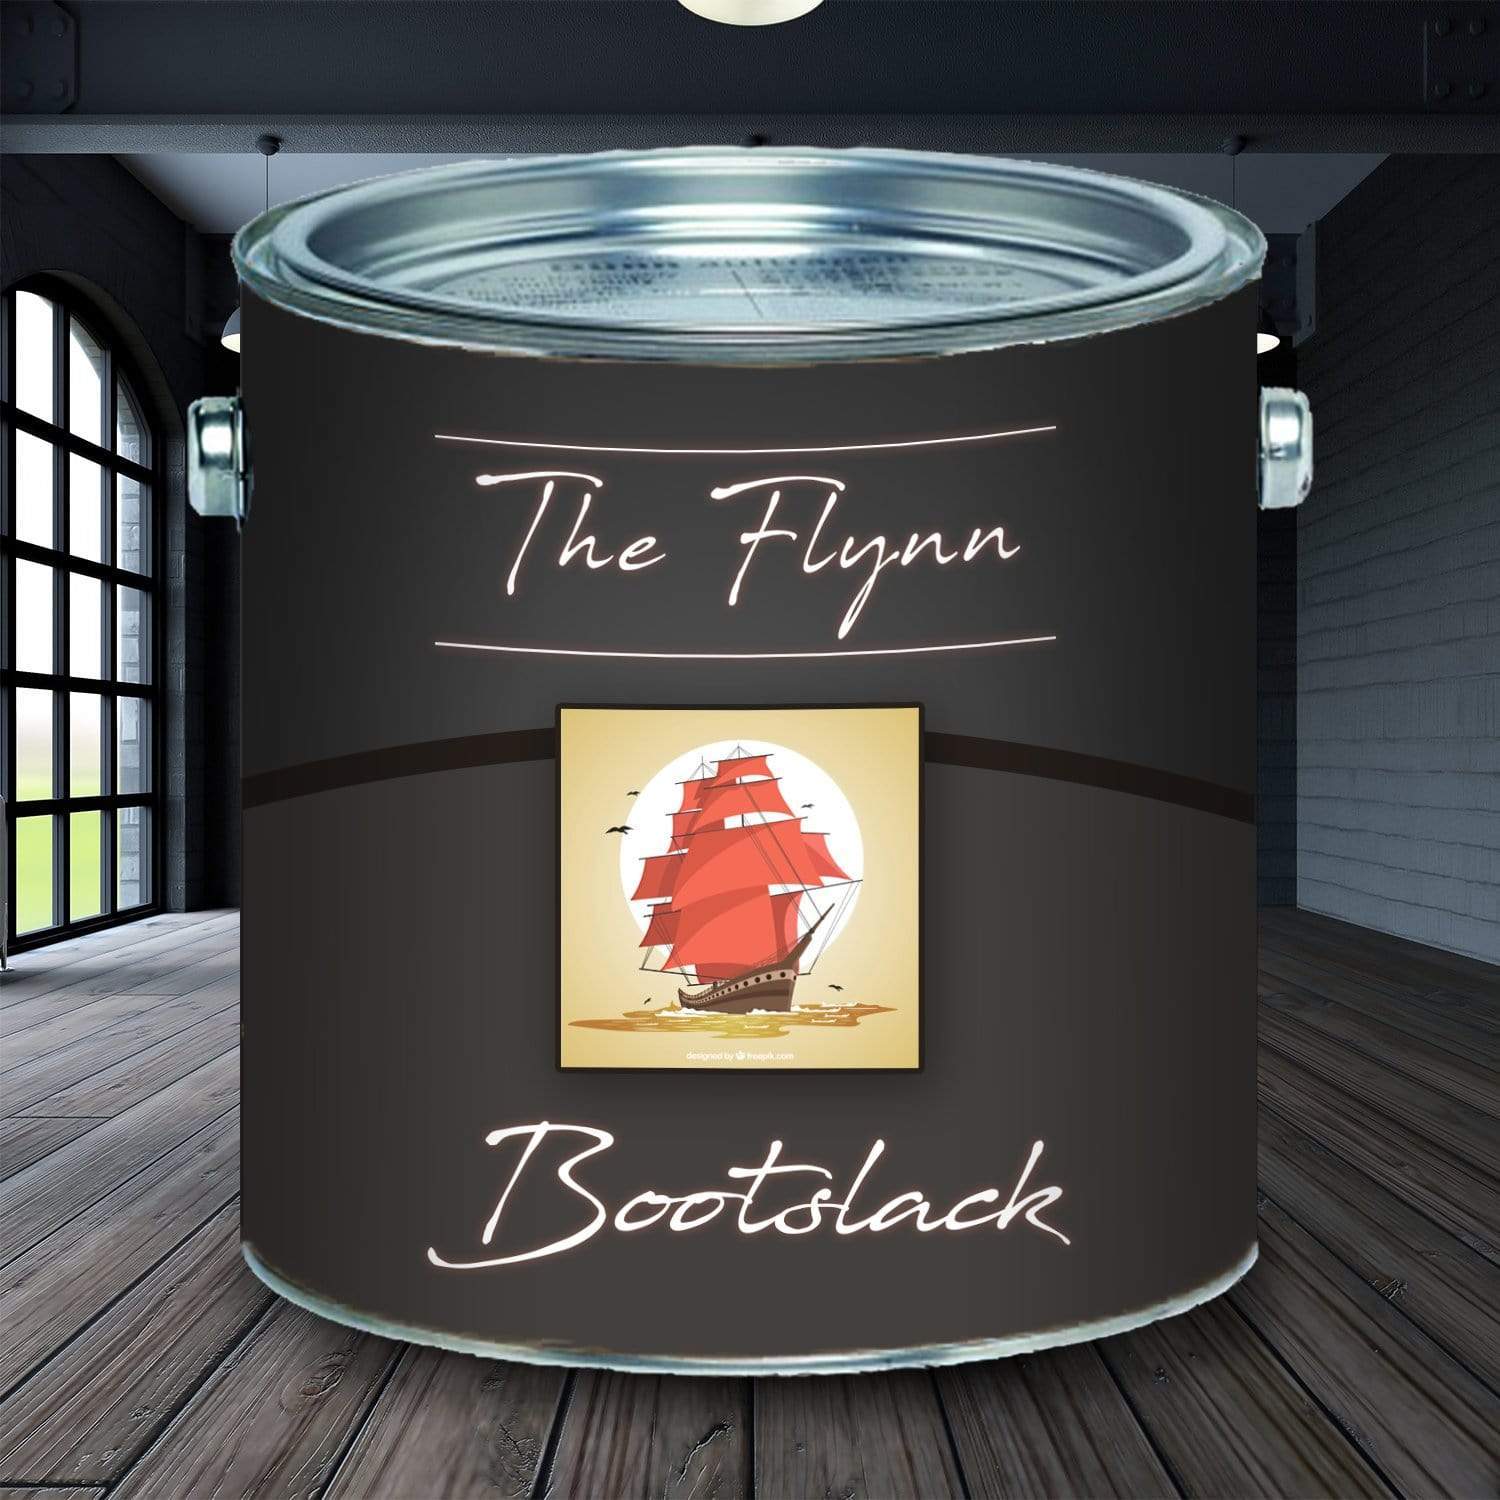 FARBENLÖWE The Flynn Bootslack - Dauerhafter Schutz